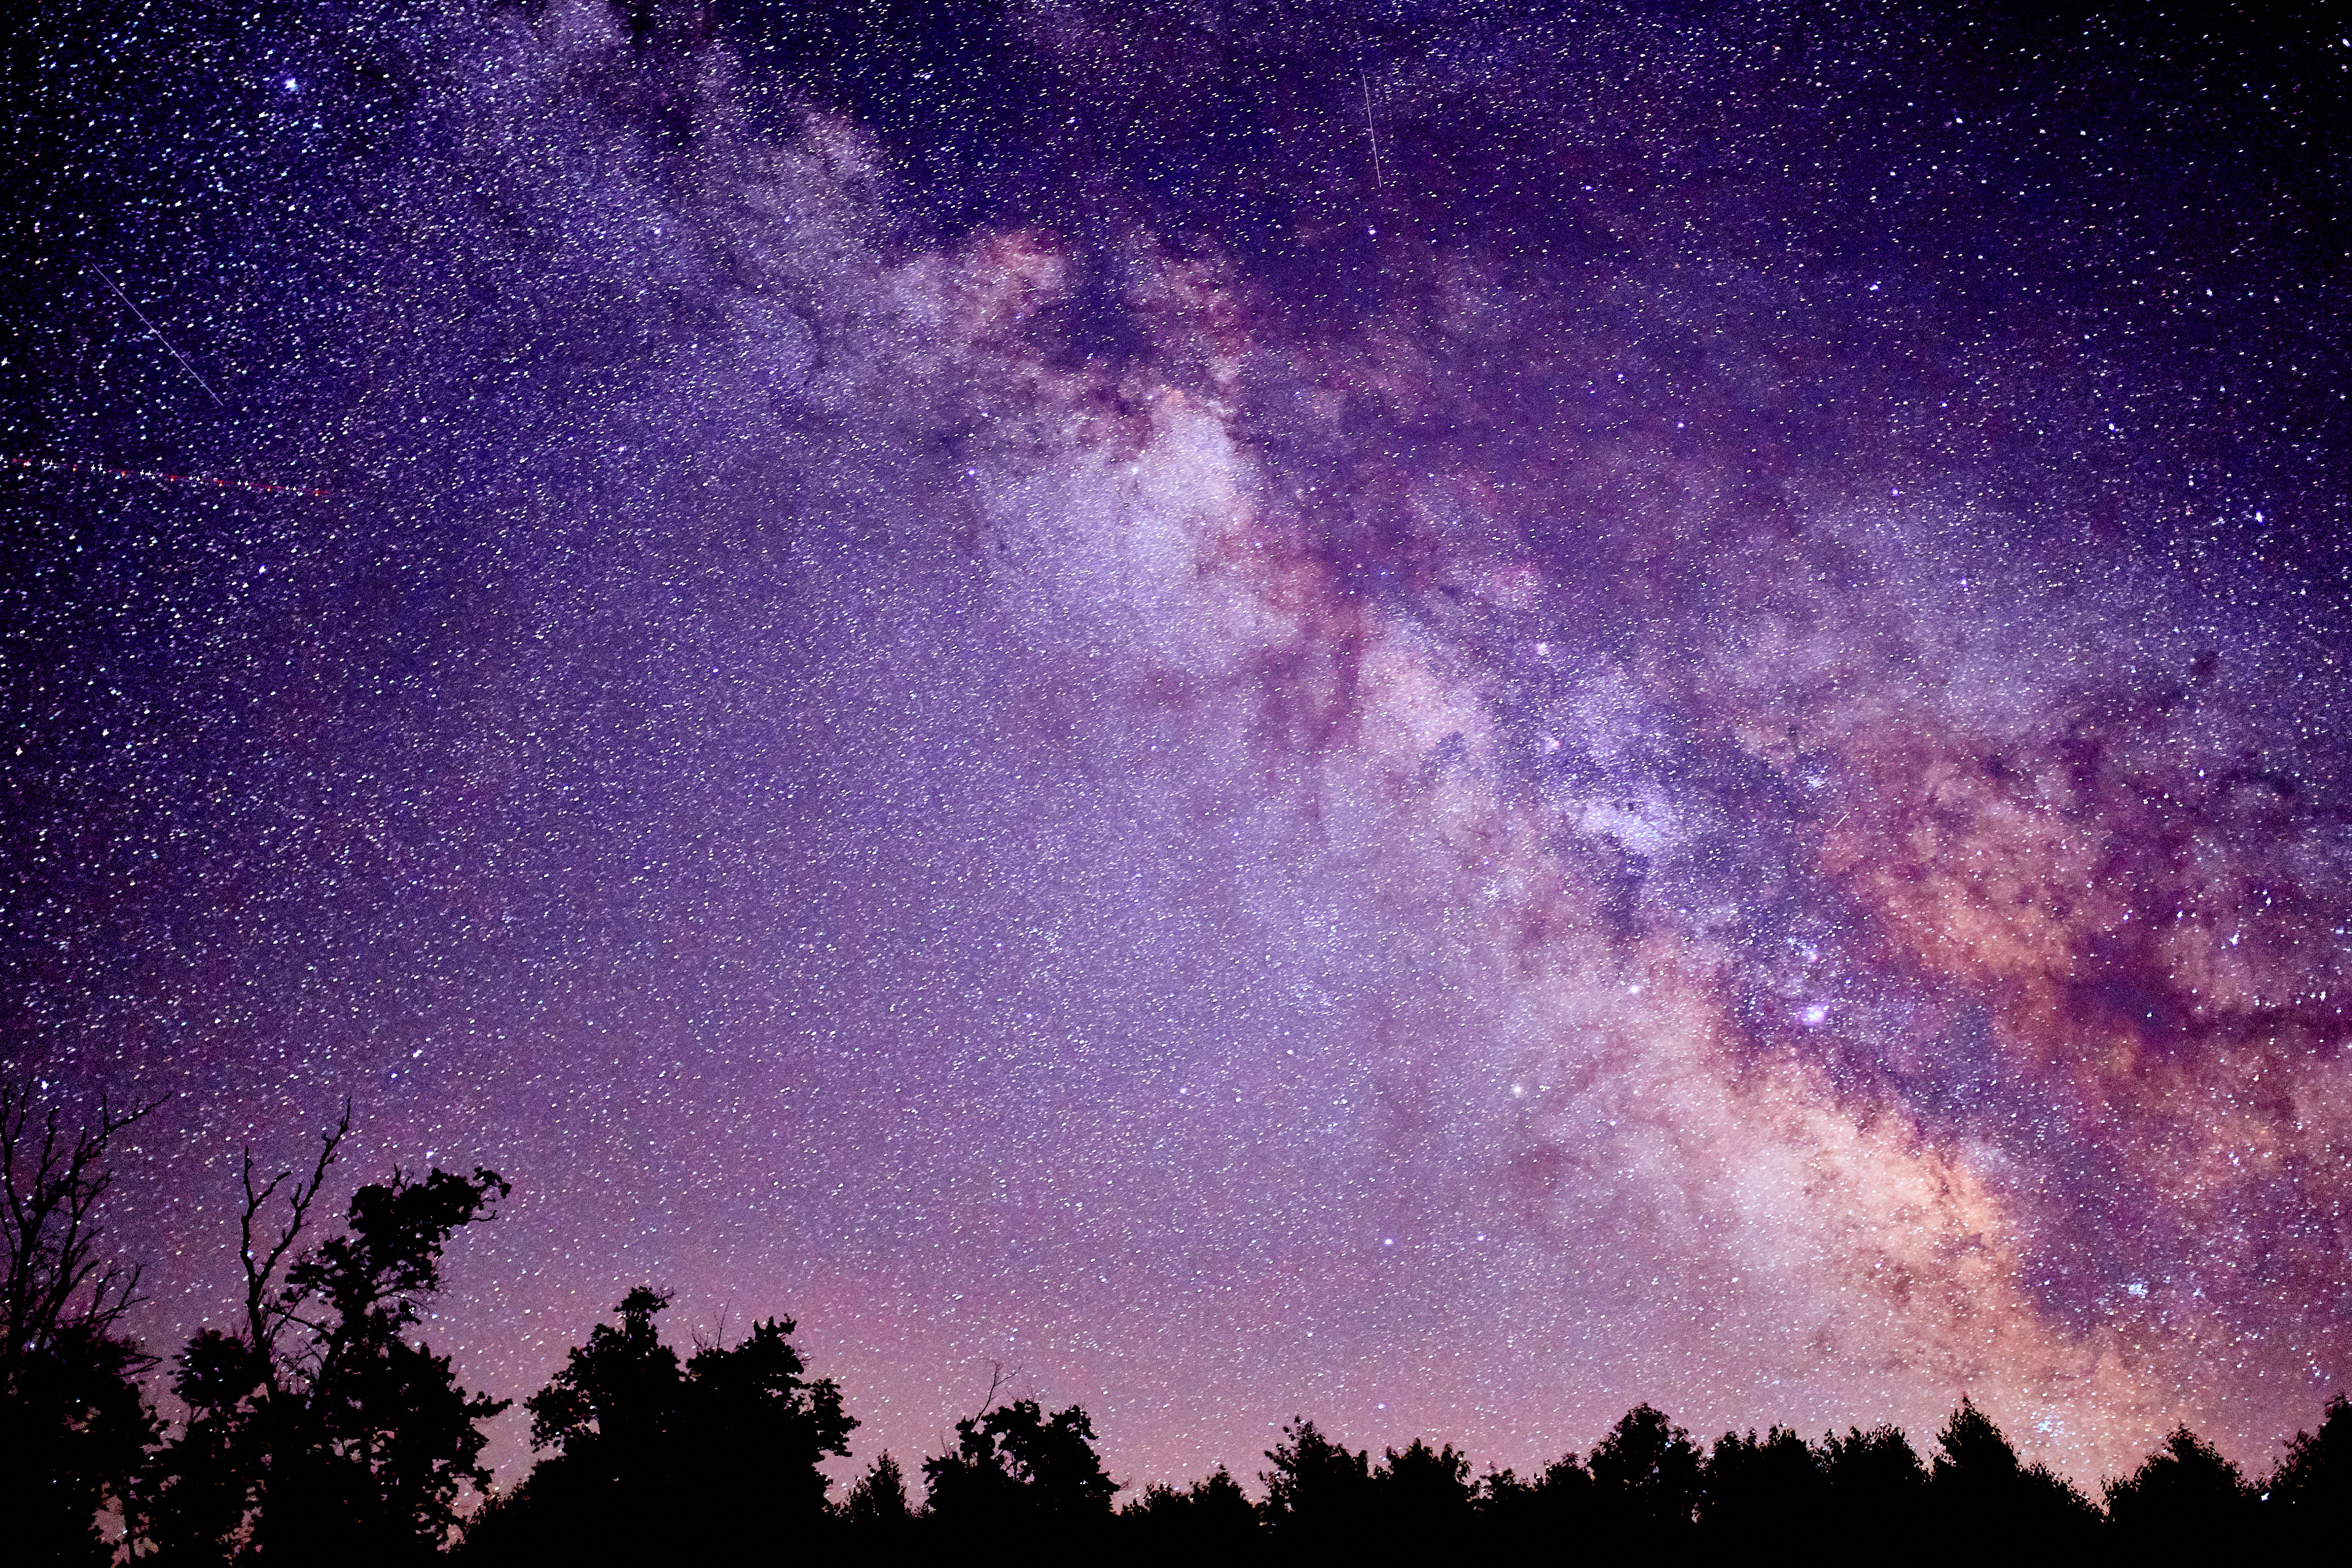 Milky Way on a purple sky by Mathew Schwartz